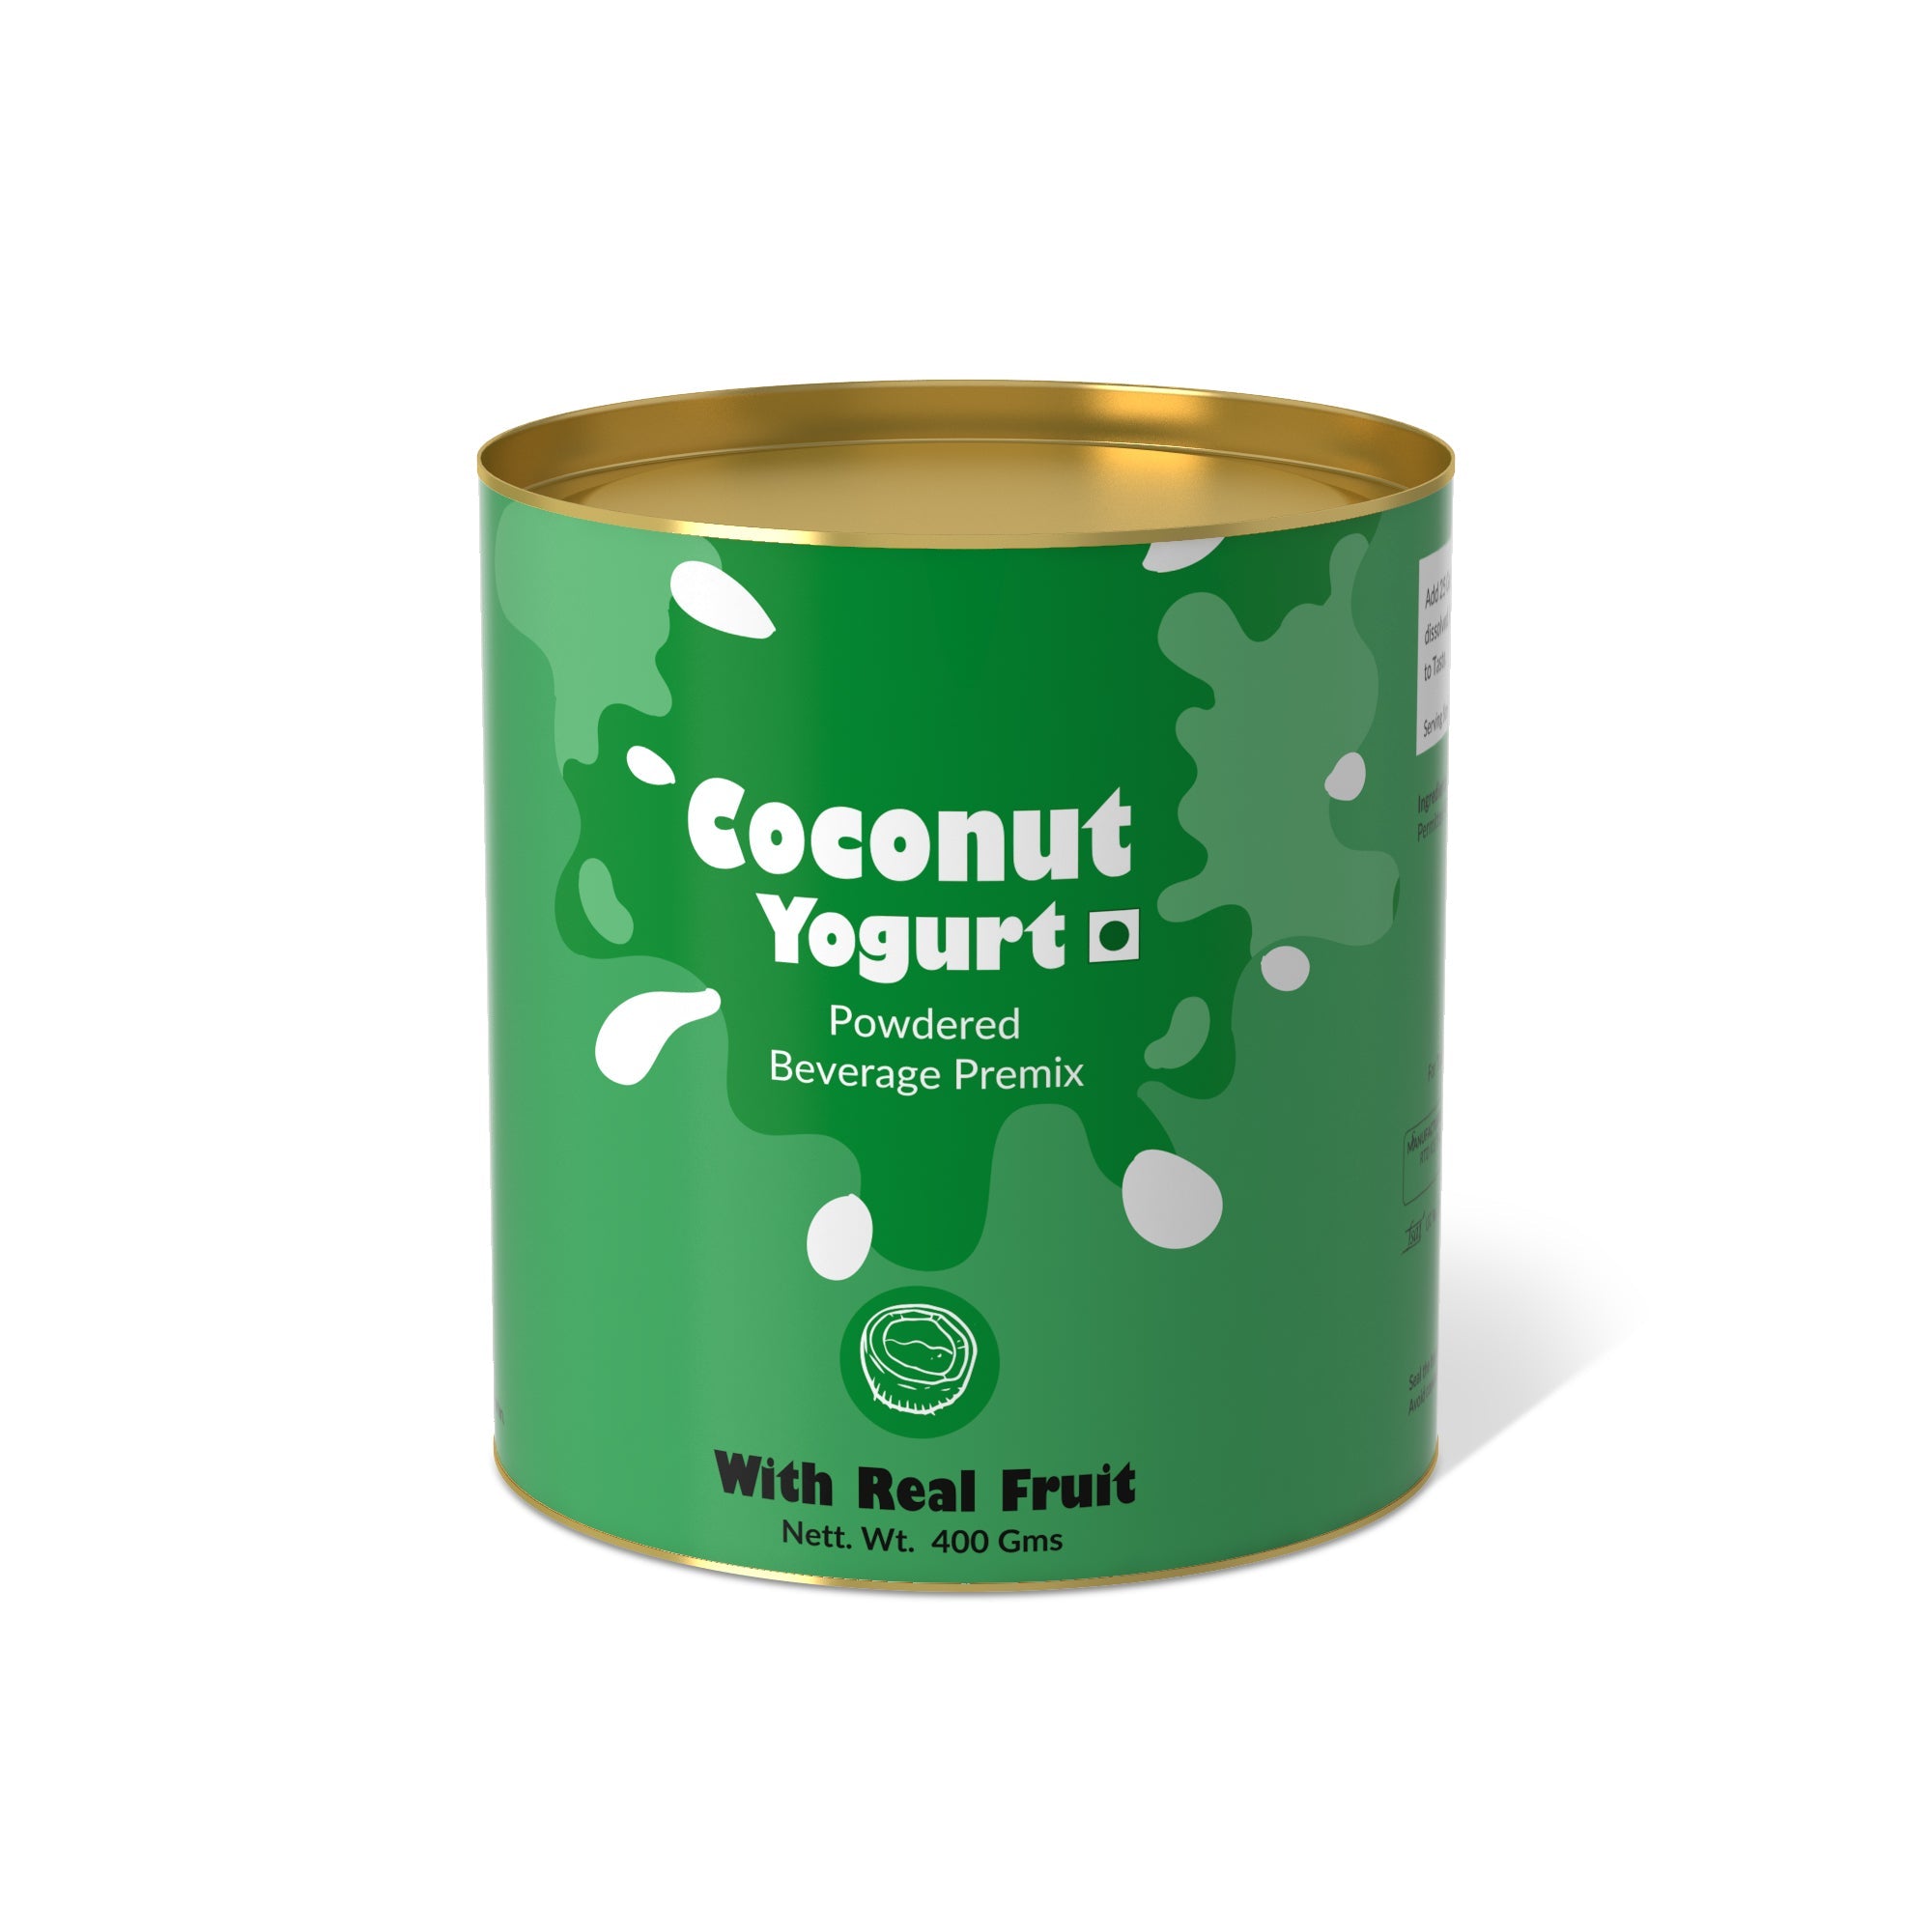 Coconut Yogurt Mix - 250 gms